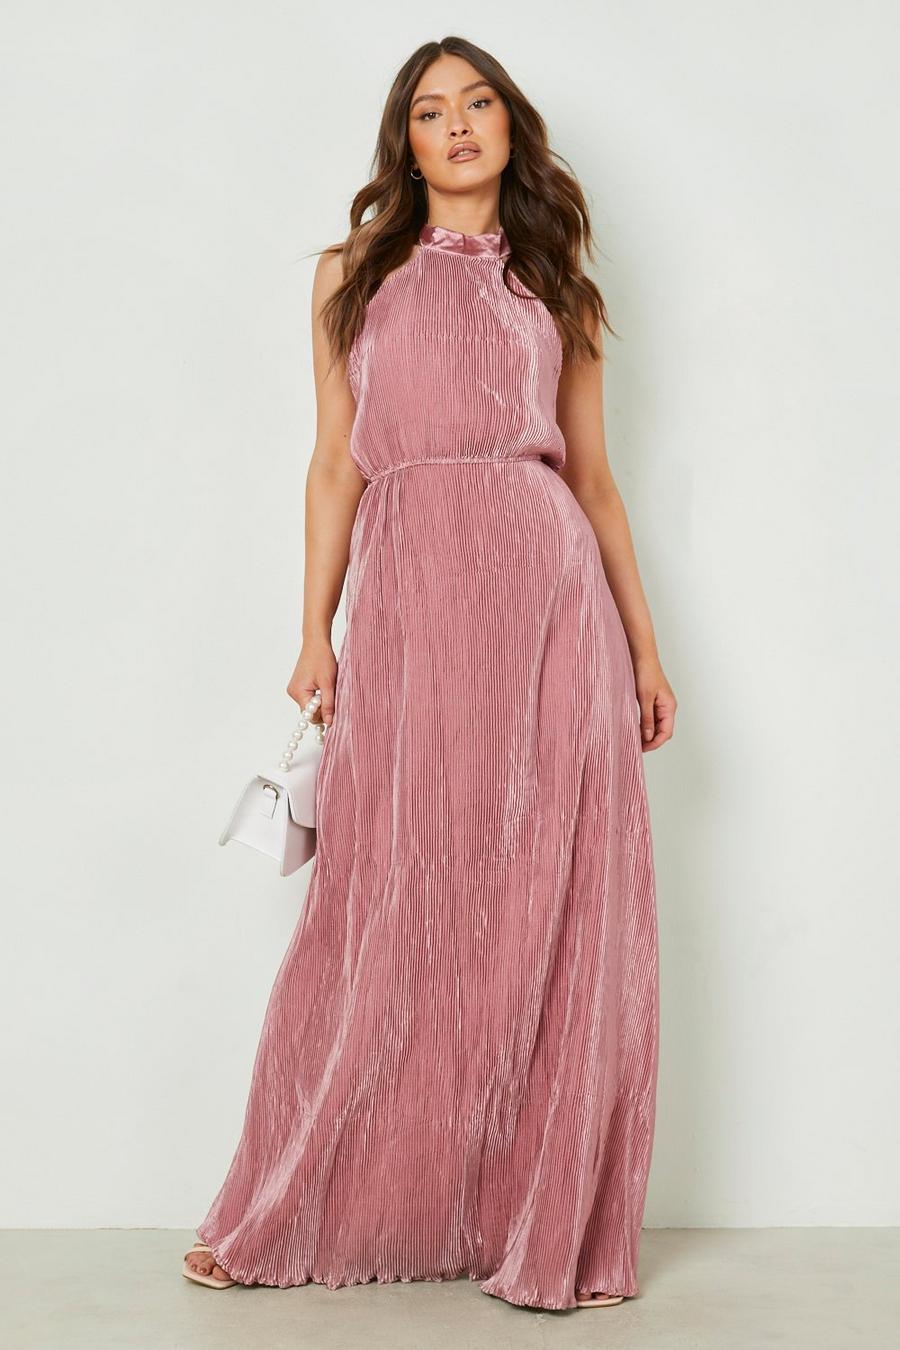 Blush pink Halterneck Mix And Match Bridesmaids Dress